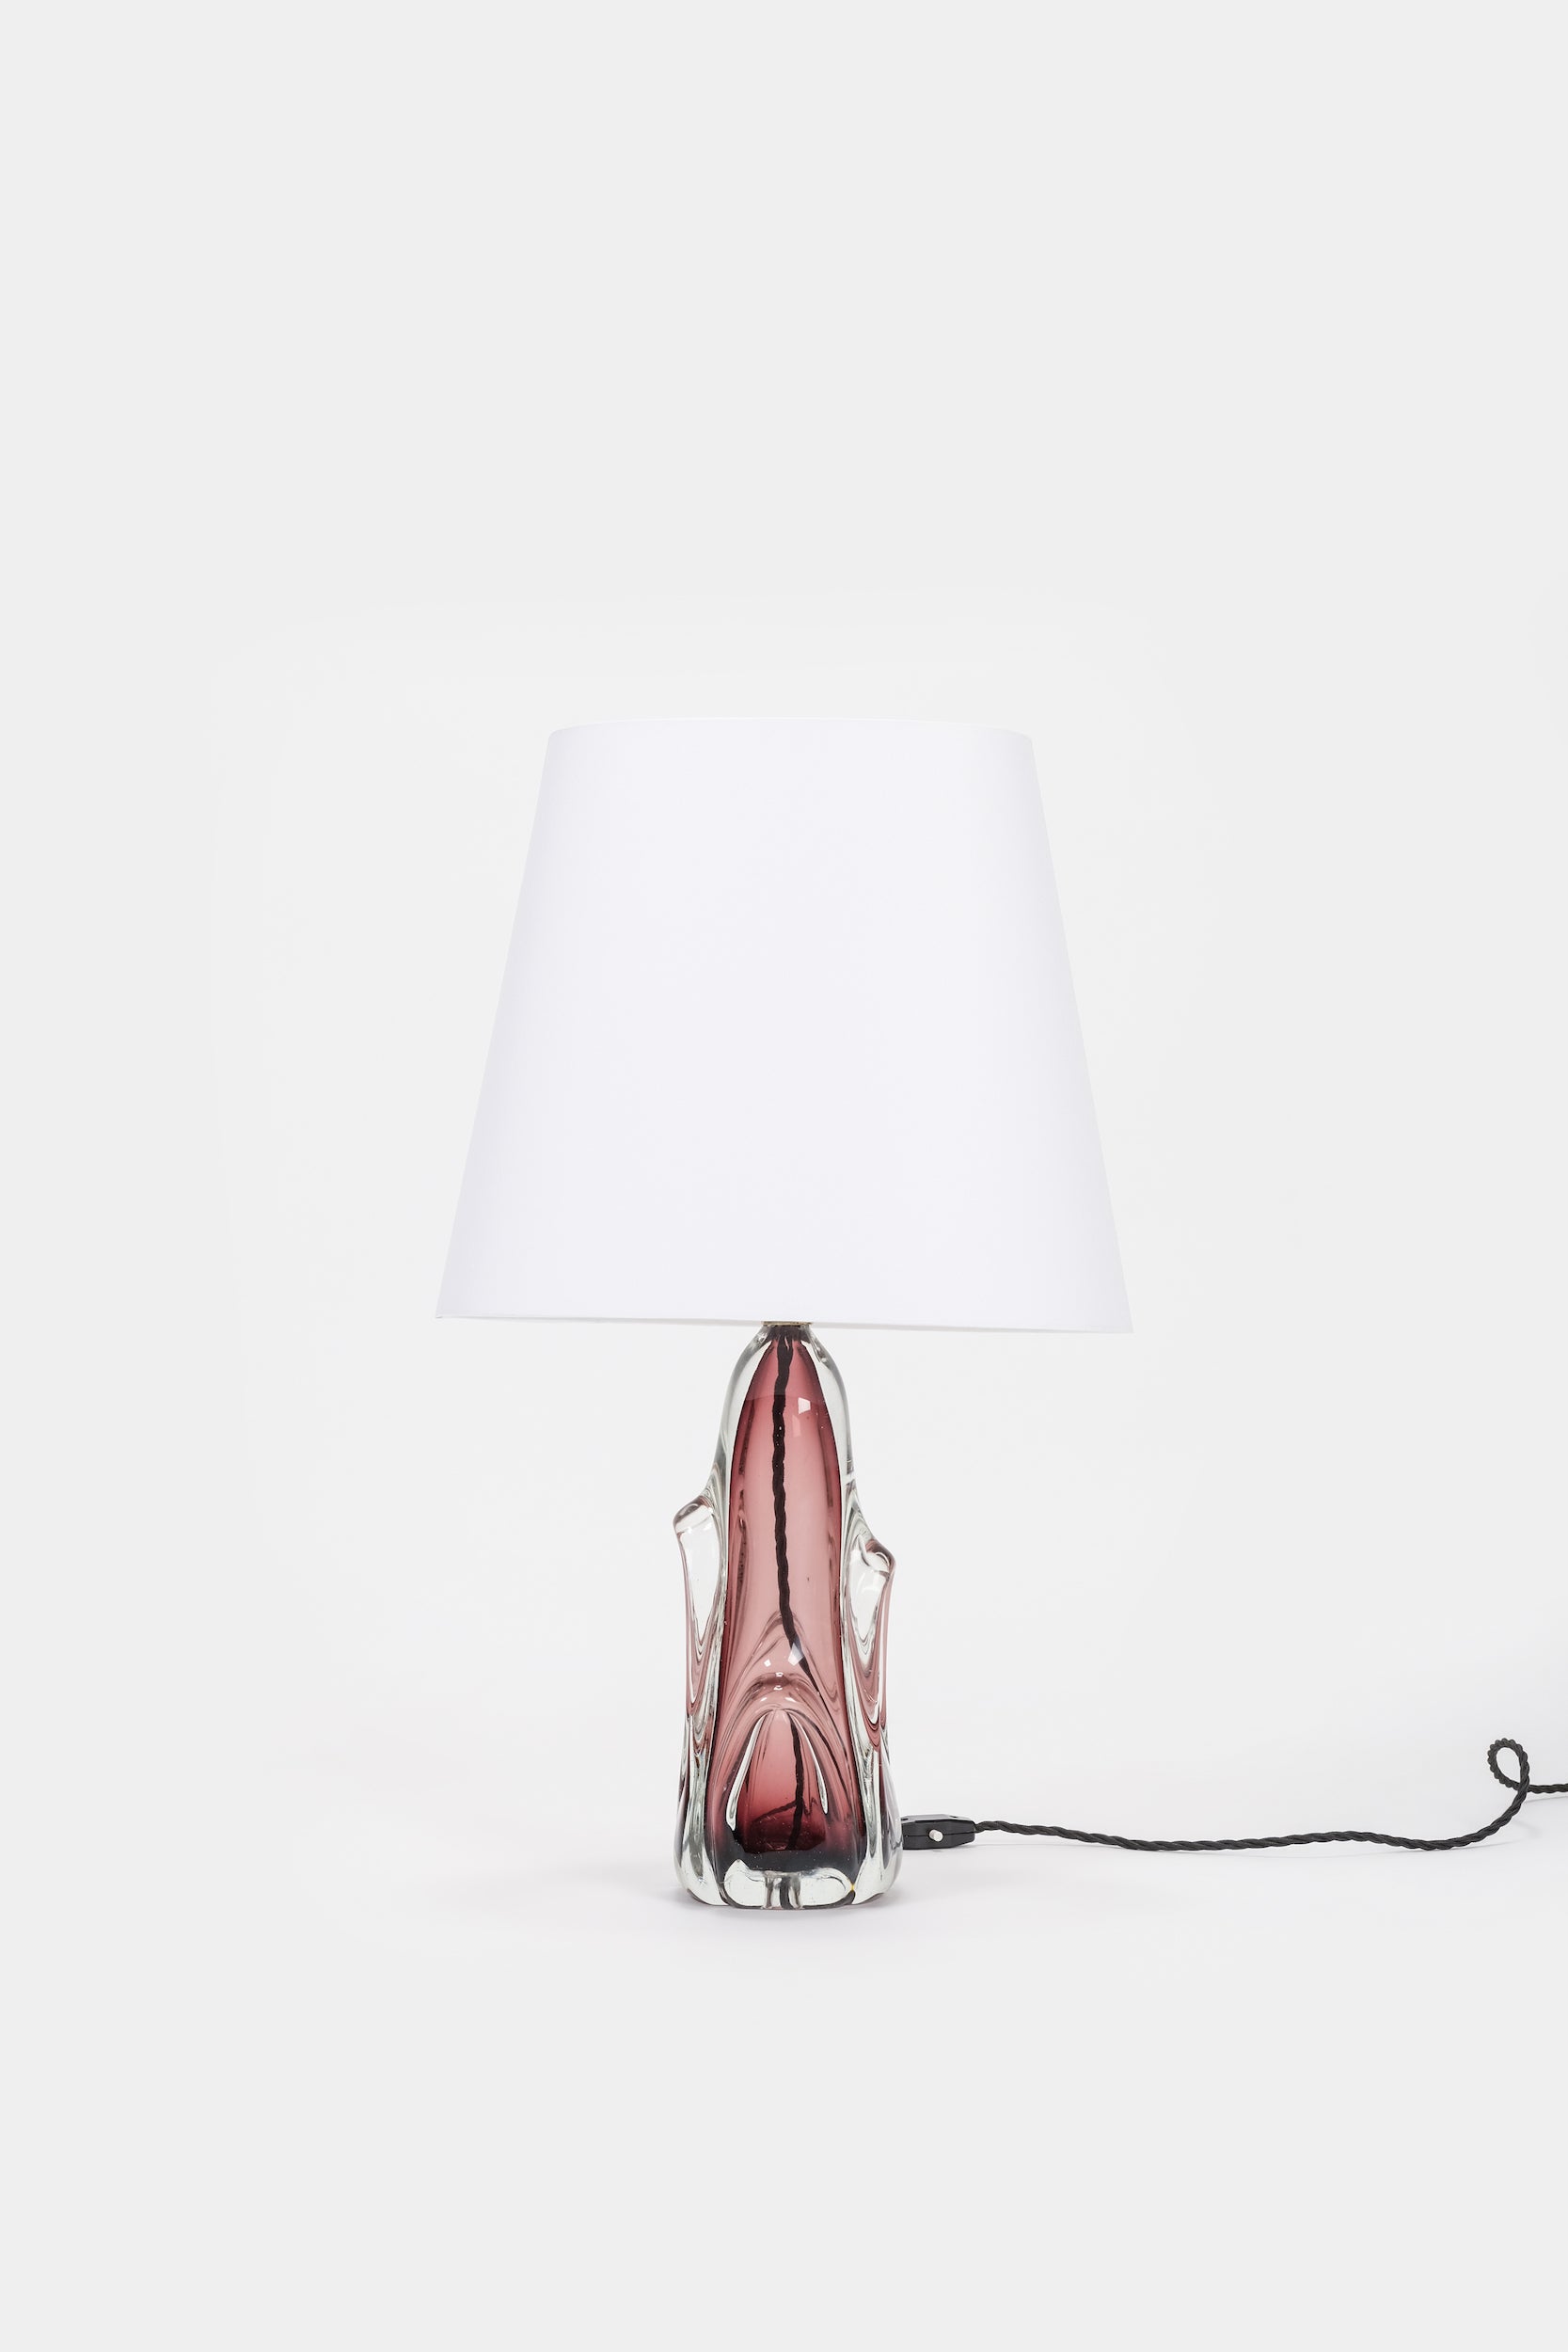 Murano Glaslampe mit neuem Schirm, 50er